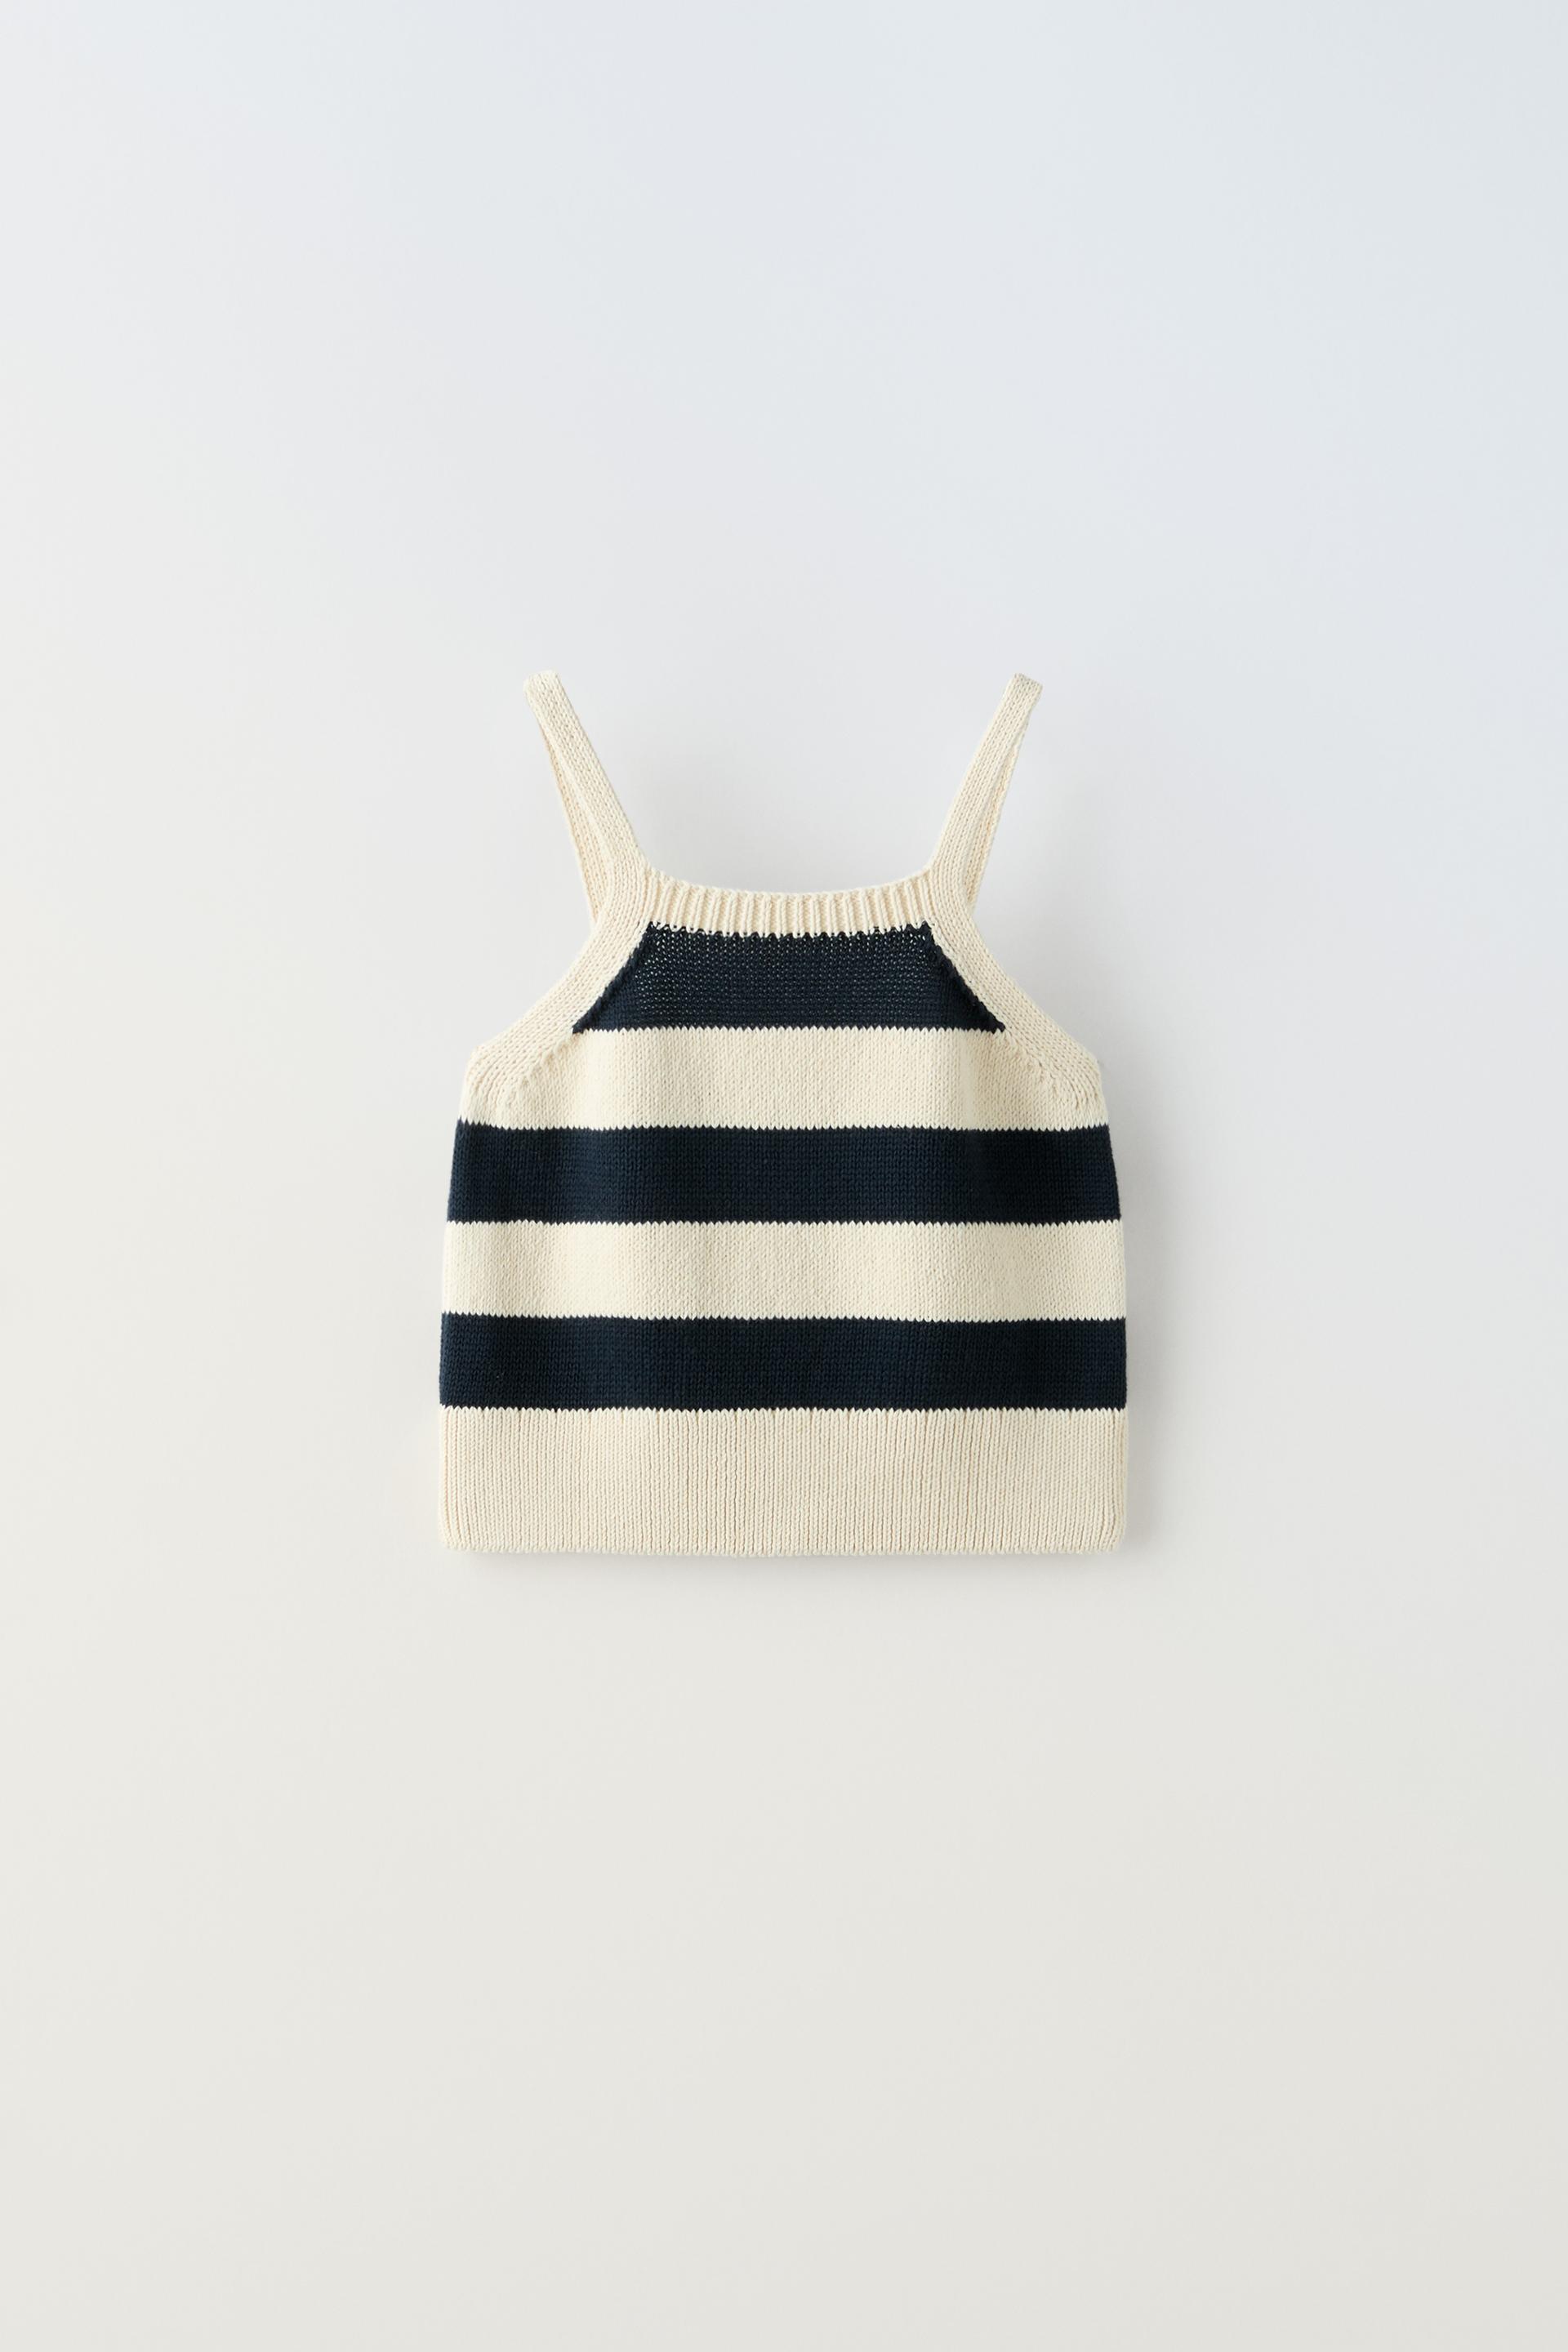 Топ Zara Striped Knit, светло-бежевый топ zara short sleeve sequinned knit светло бежевый